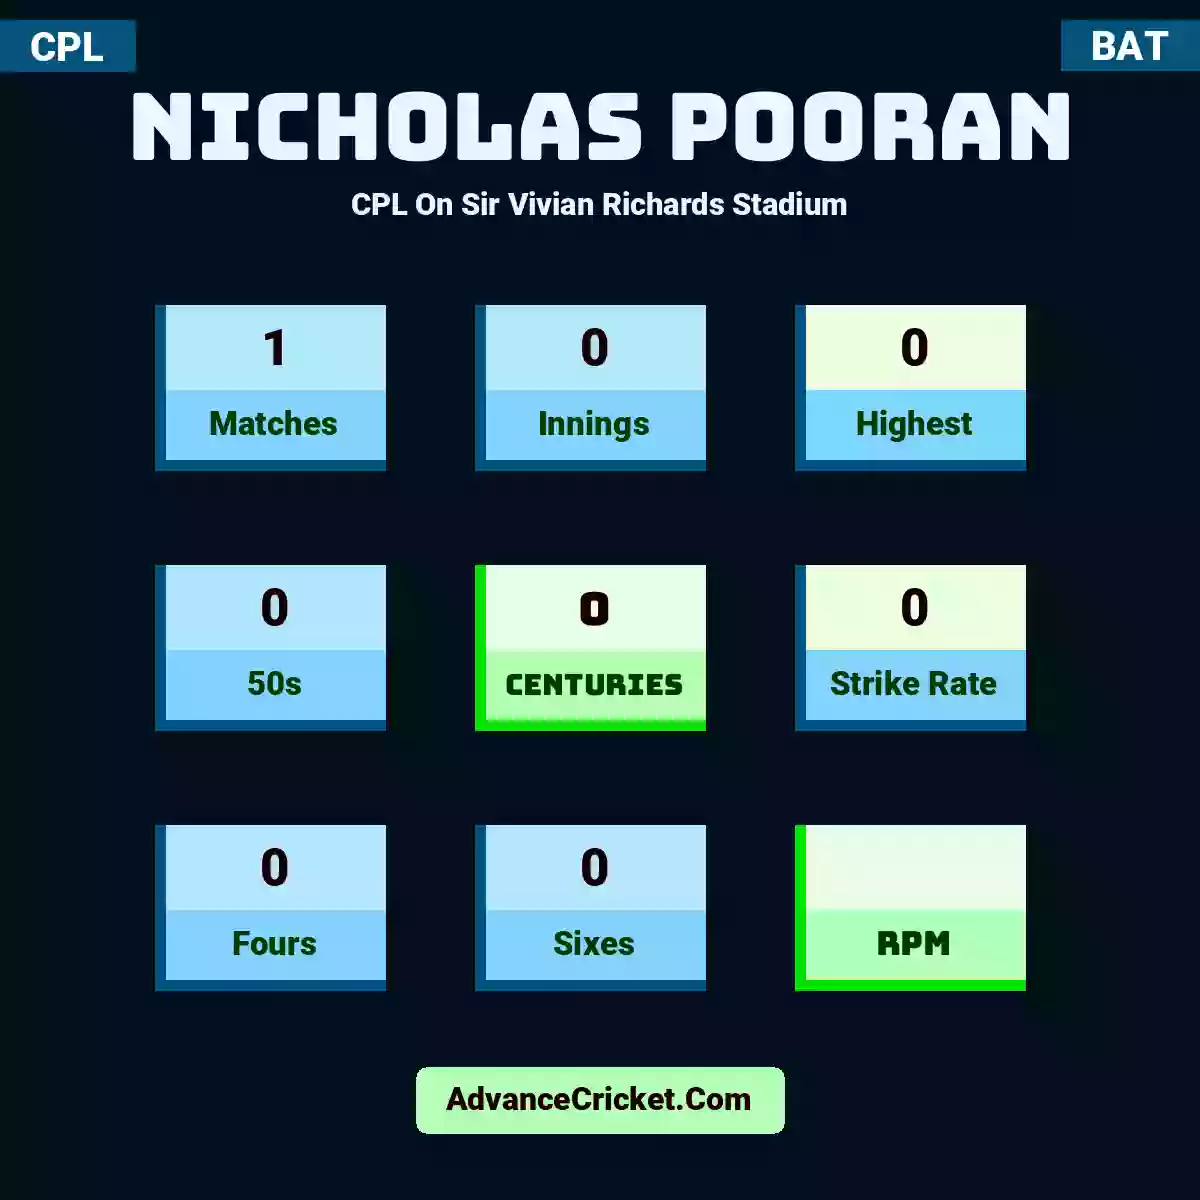 Nicholas Pooran CPL  On Sir Vivian Richards Stadium, Nicholas Pooran played 1 matches, scored 0 runs as highest, 0 half-centuries, and 0 centuries, with a strike rate of 0. N.Pooran hit 0 fours and 0 sixes.